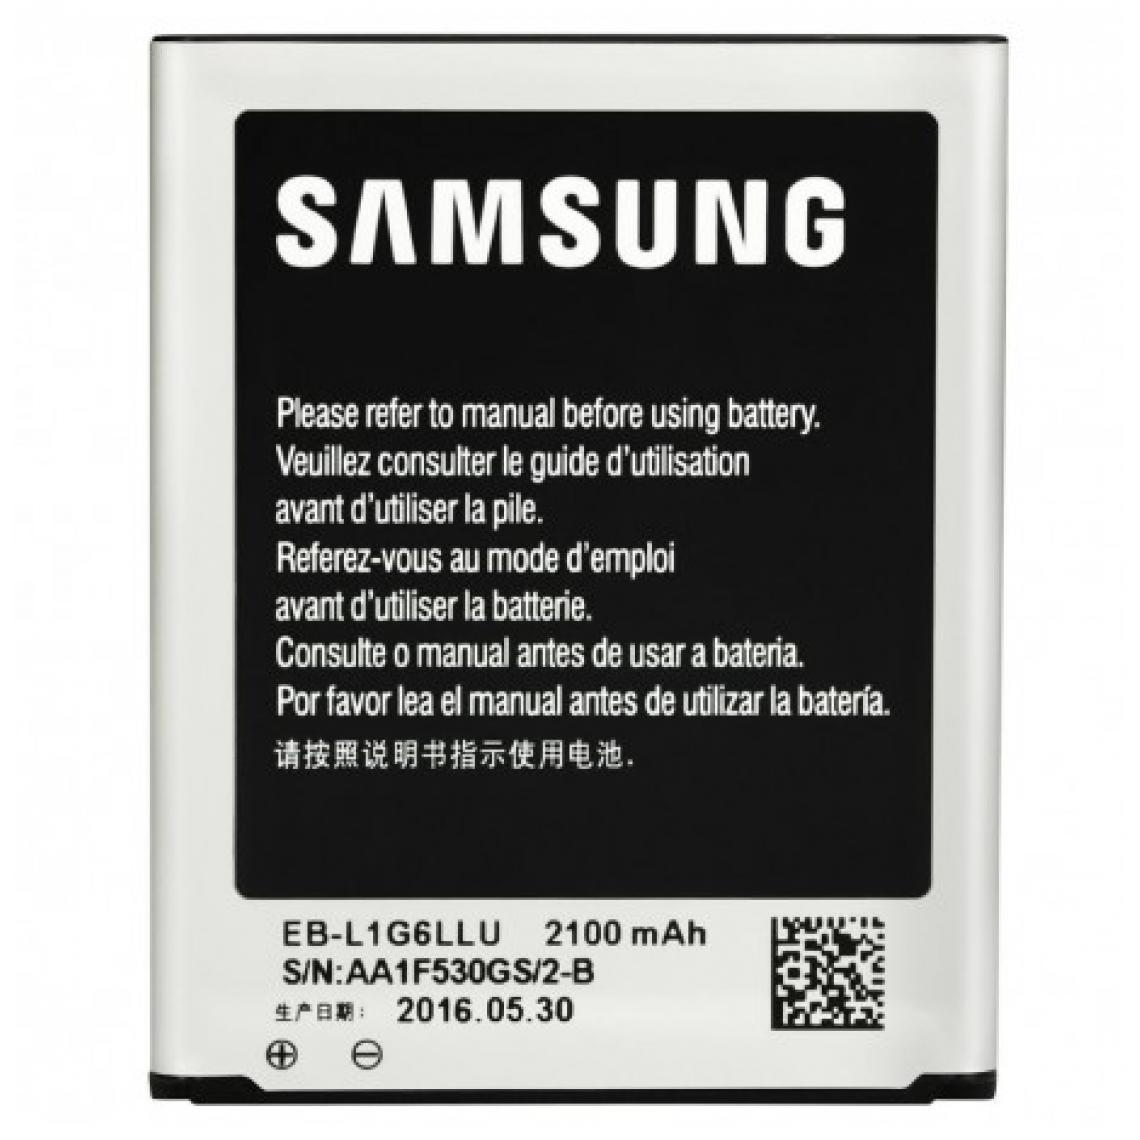 Samsung - BATTERIE ORIGINALE -- SAMSUNG GALAXY S3 i9300 -- ORIGINE EBL1G6LLU 2100mAh - Batterie téléphone